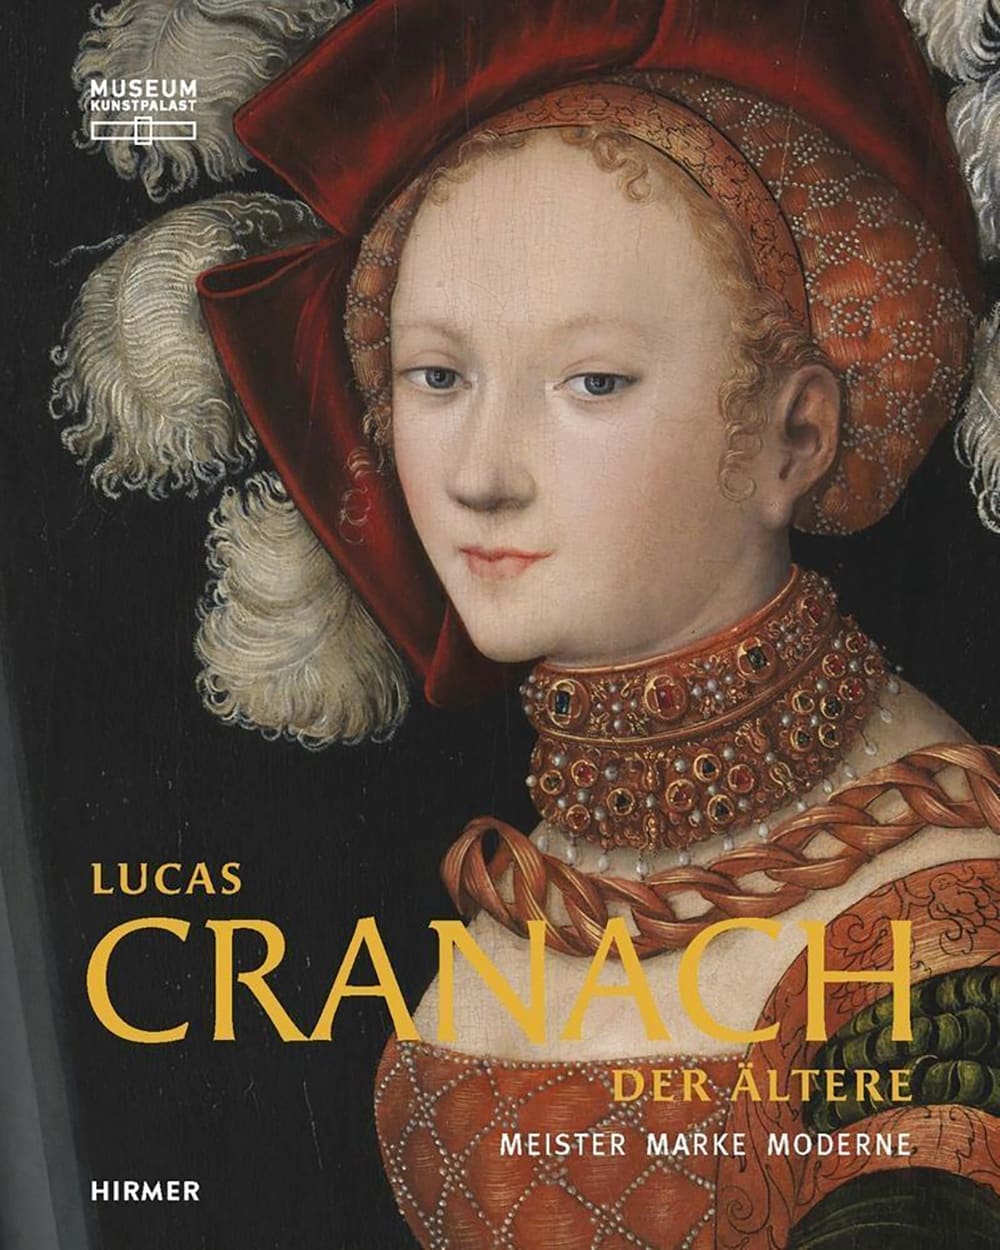 Lucas Cranach der Ältere: Meister - Marke - Moderne